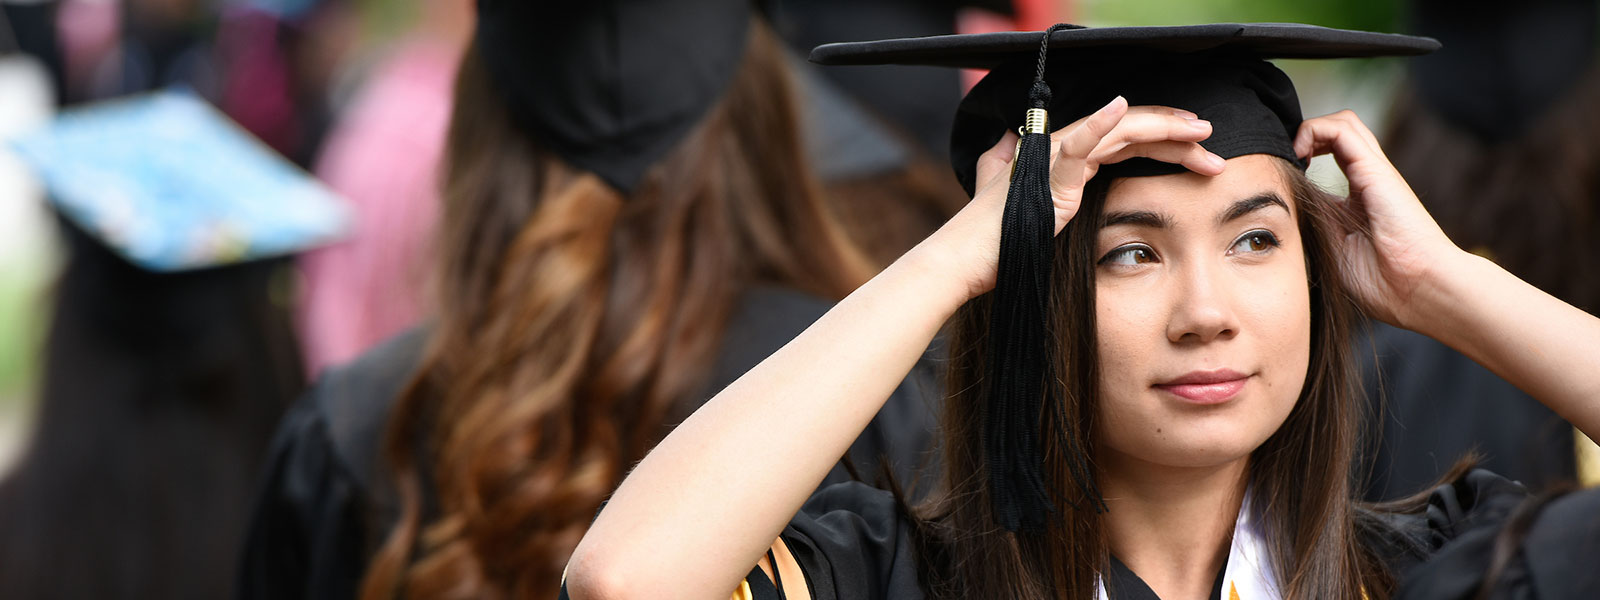 Student putting on her graduation cap